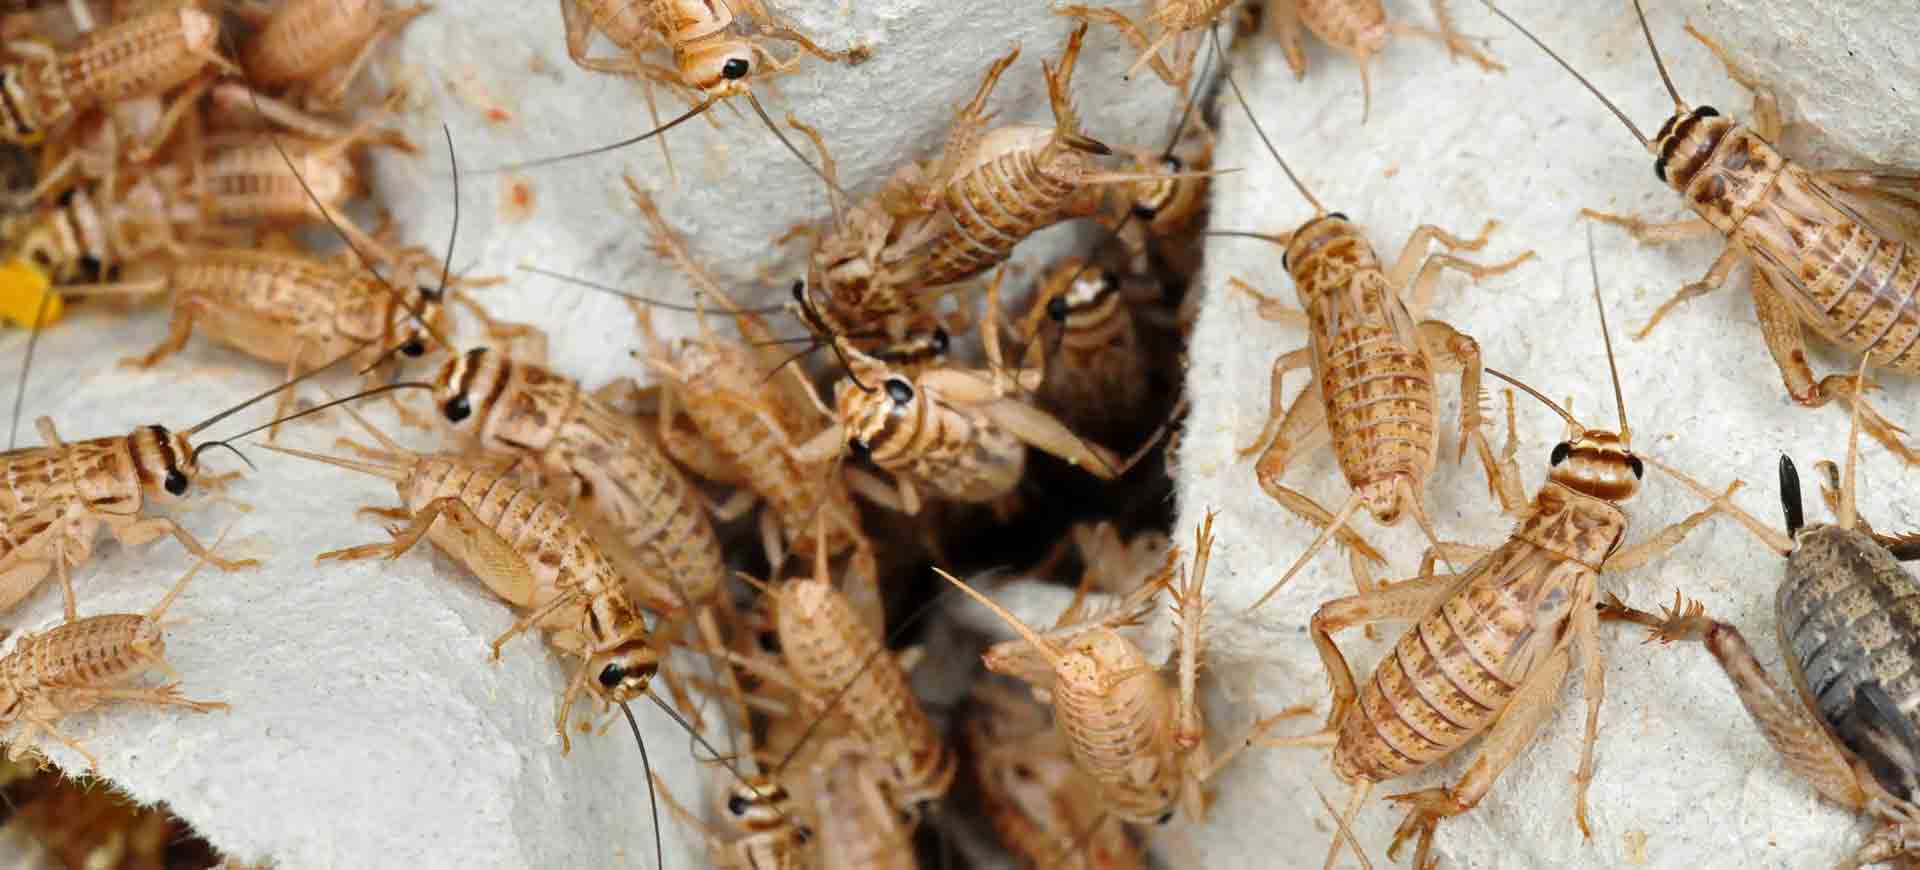 cricket pest control winter gardens